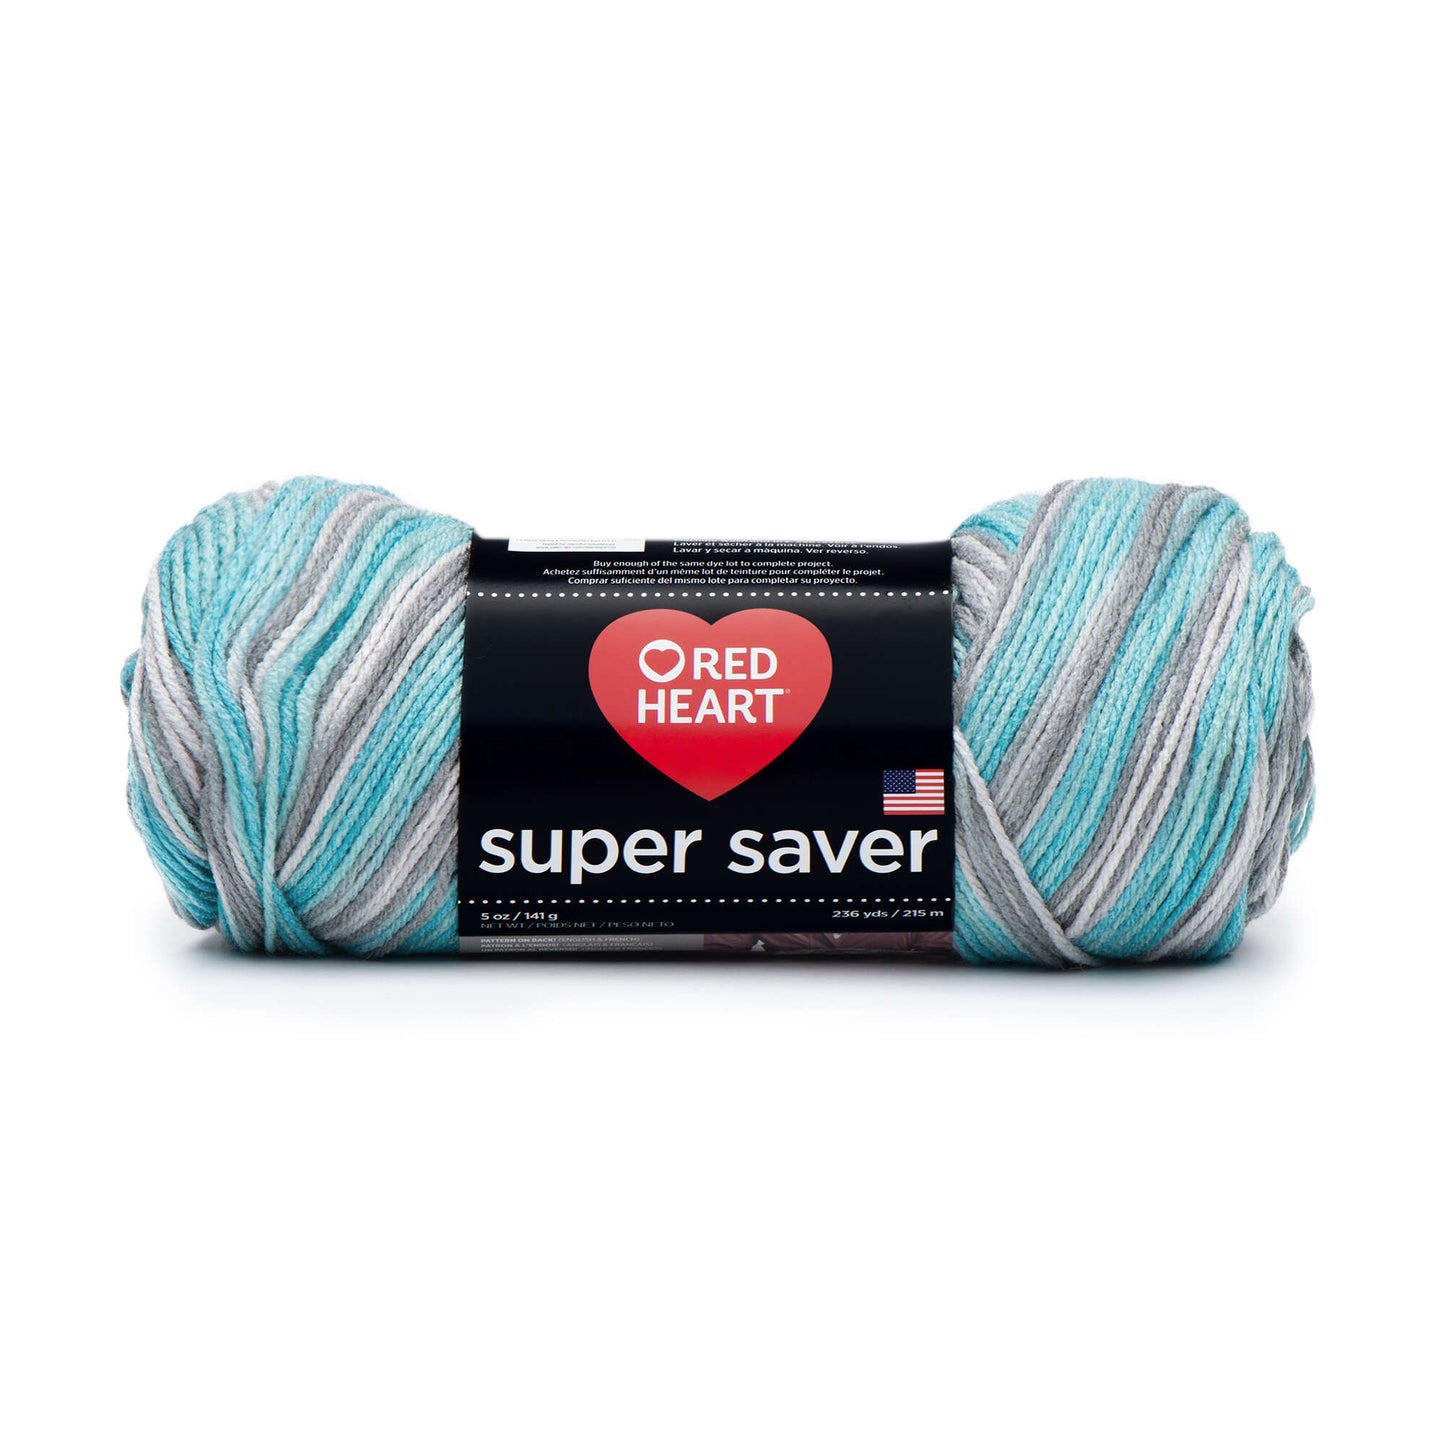 Red Heart Super Saver Yarn - 236 yds